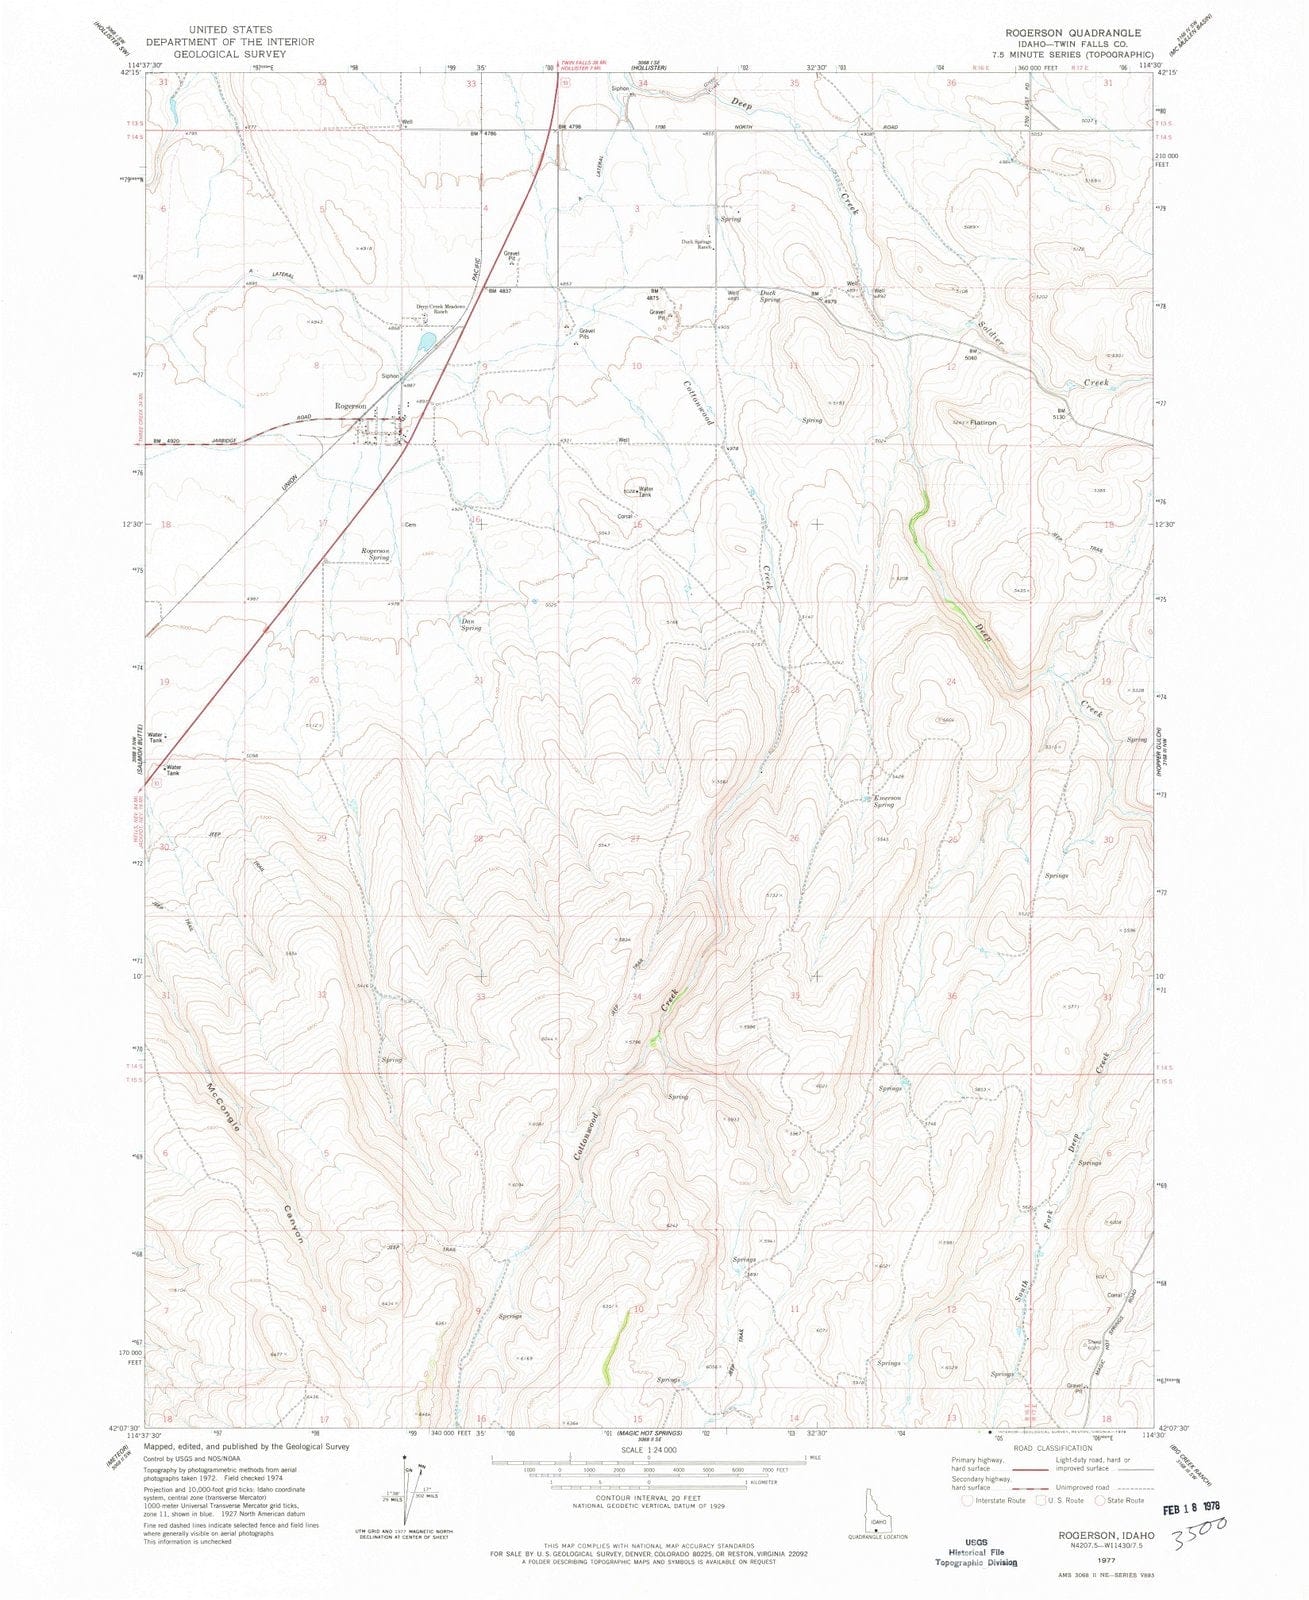 1977 Rogerson, ID - Idaho - USGS Topographic Map